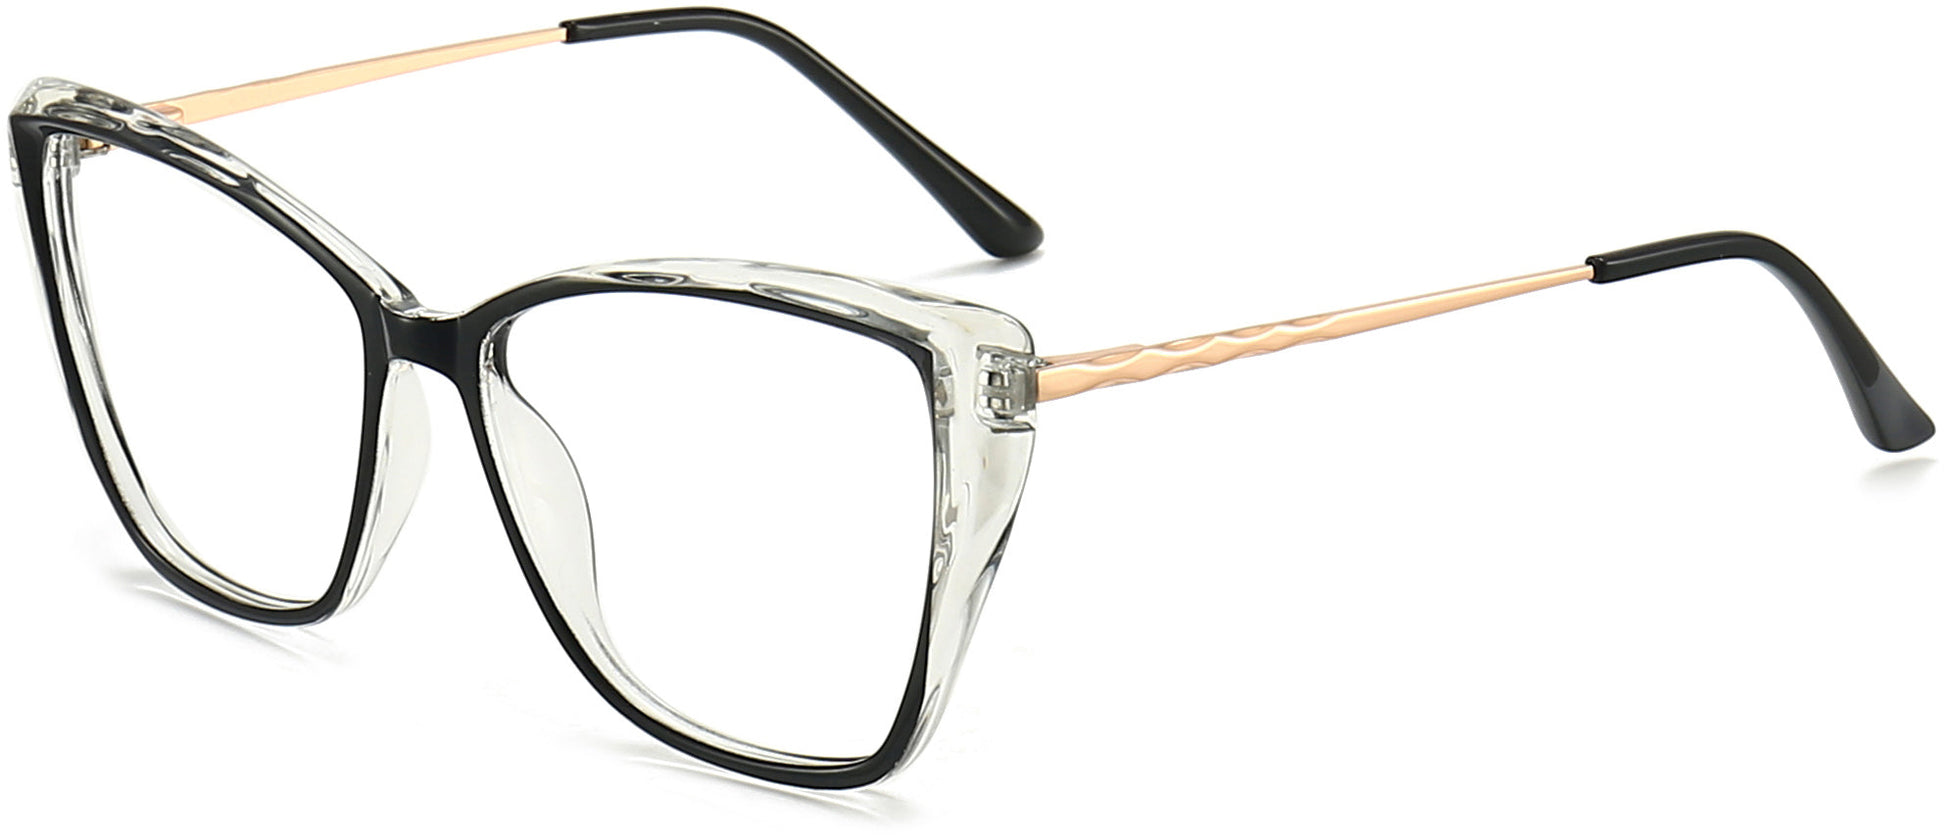 Dayana Cateye Black Eyeglasses from ANRRI, angle view